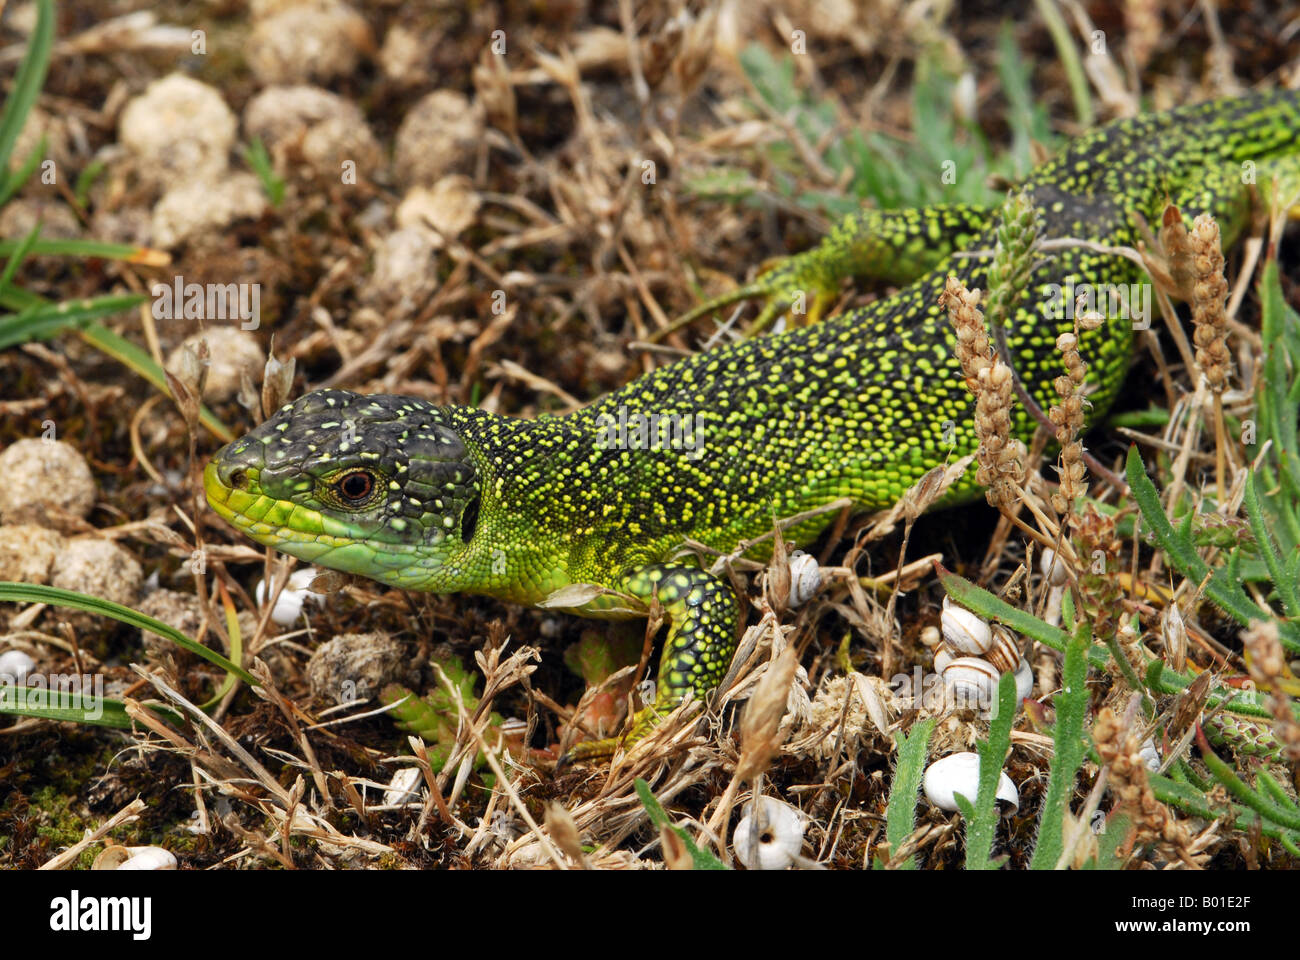 Green Lizard in close up Stock Photo